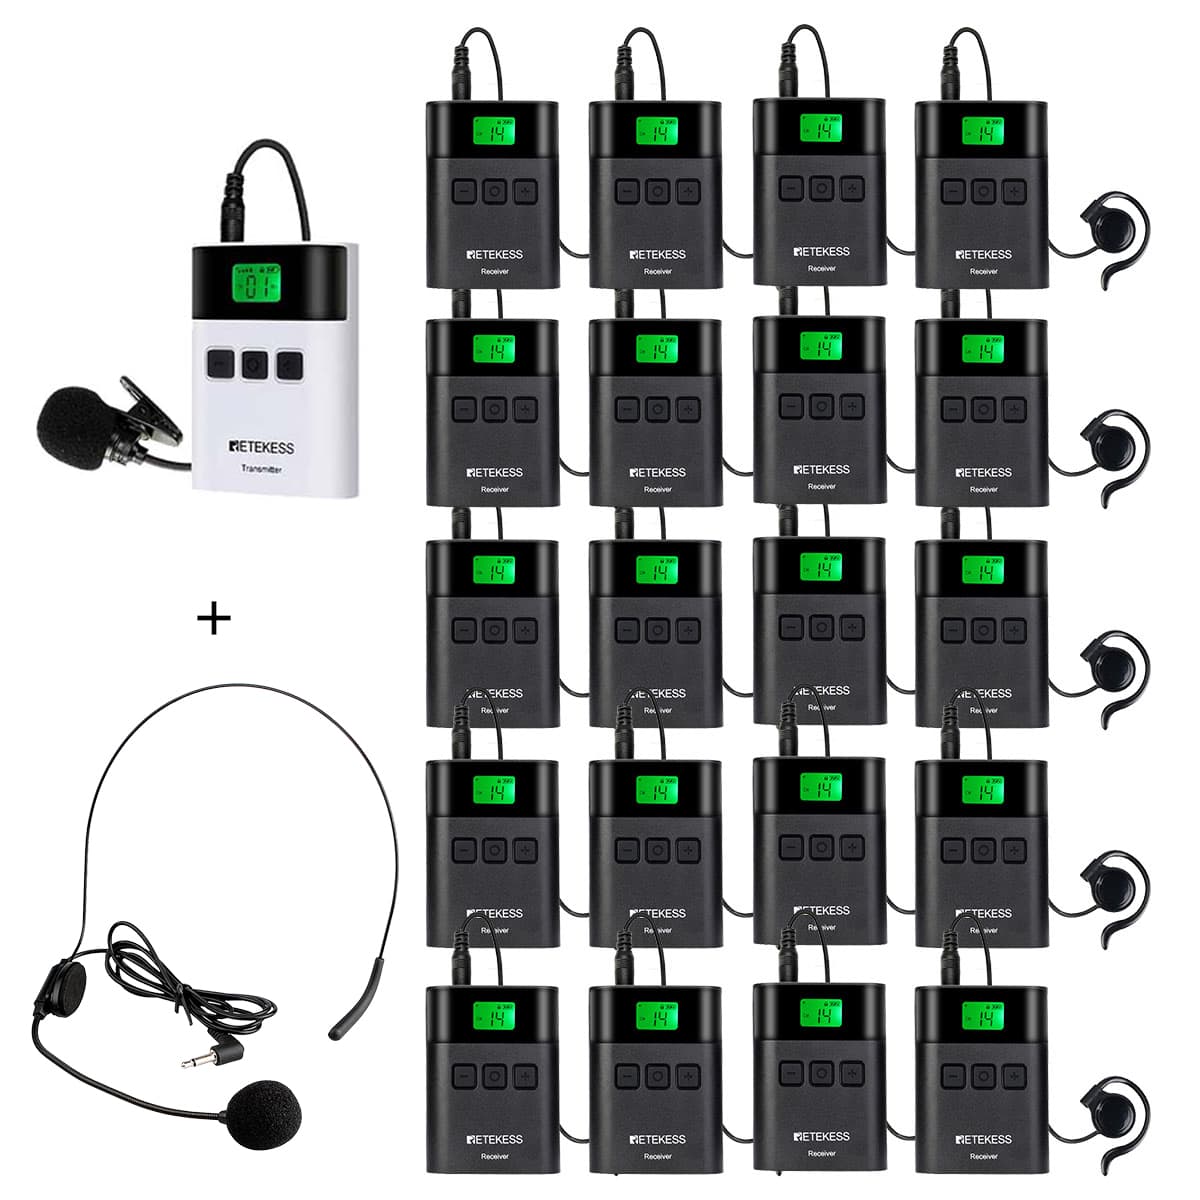 TT122 Wireless Tour Guide Audio System Long Range Communication